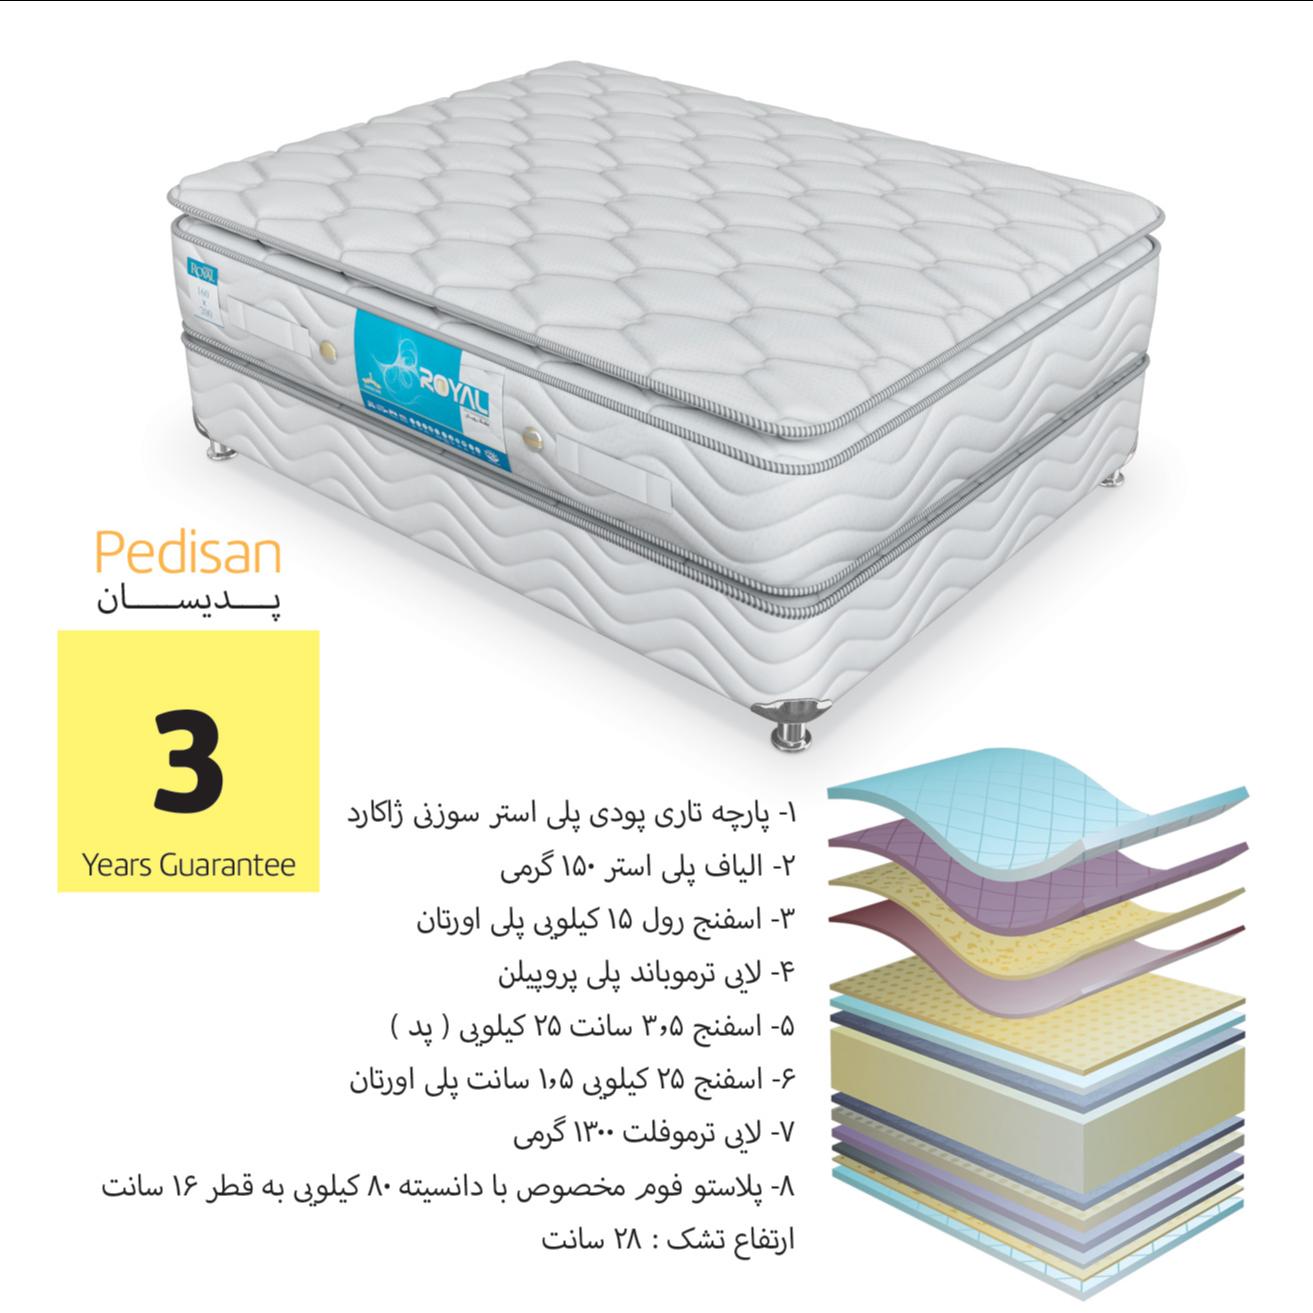 Picture Of padisan mattress